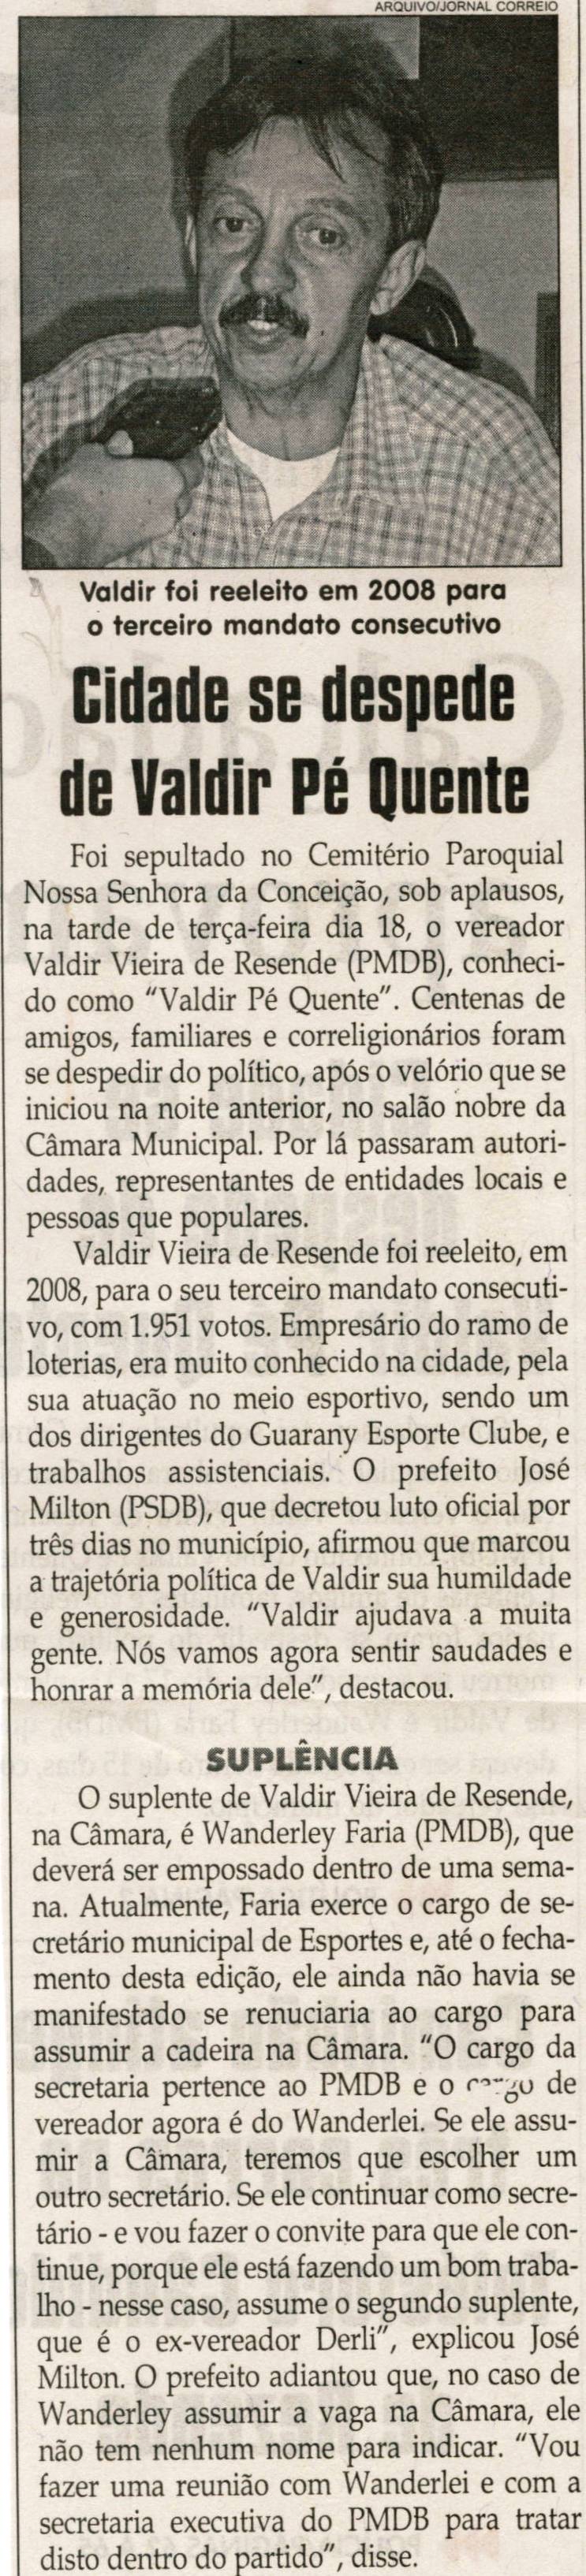 Cidade se despede de Valdir Pé Quente. Jornal Correio da Cidade, Conselheiro Lafaiete, 22 ago. 2009, p. 02.